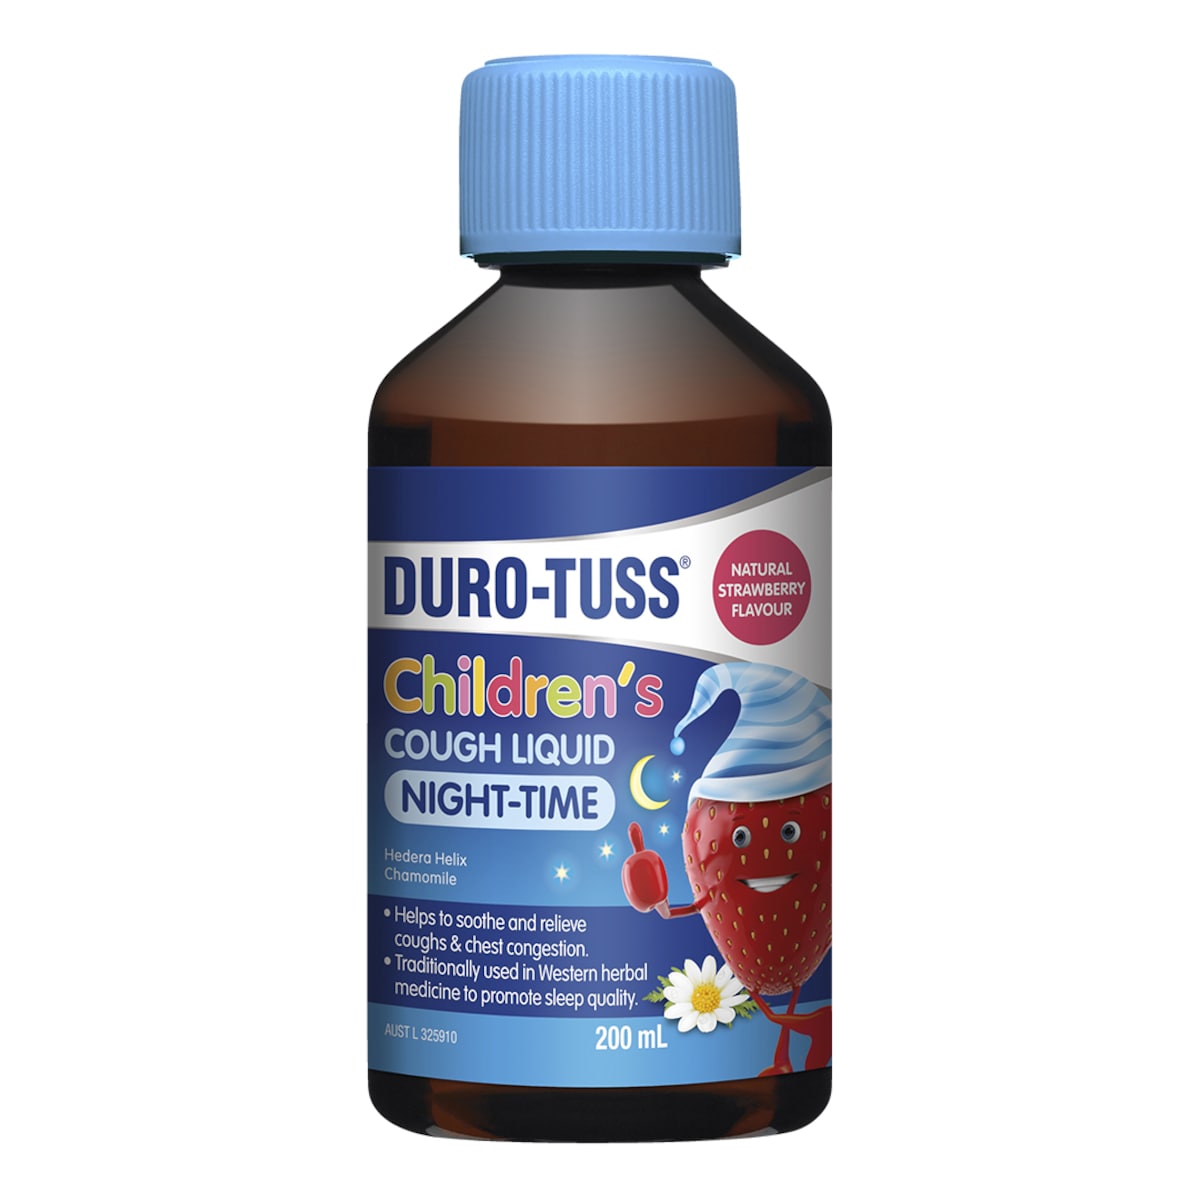 Durotuss Childrens Cough Liquid Night-Time Strawberry 200ml